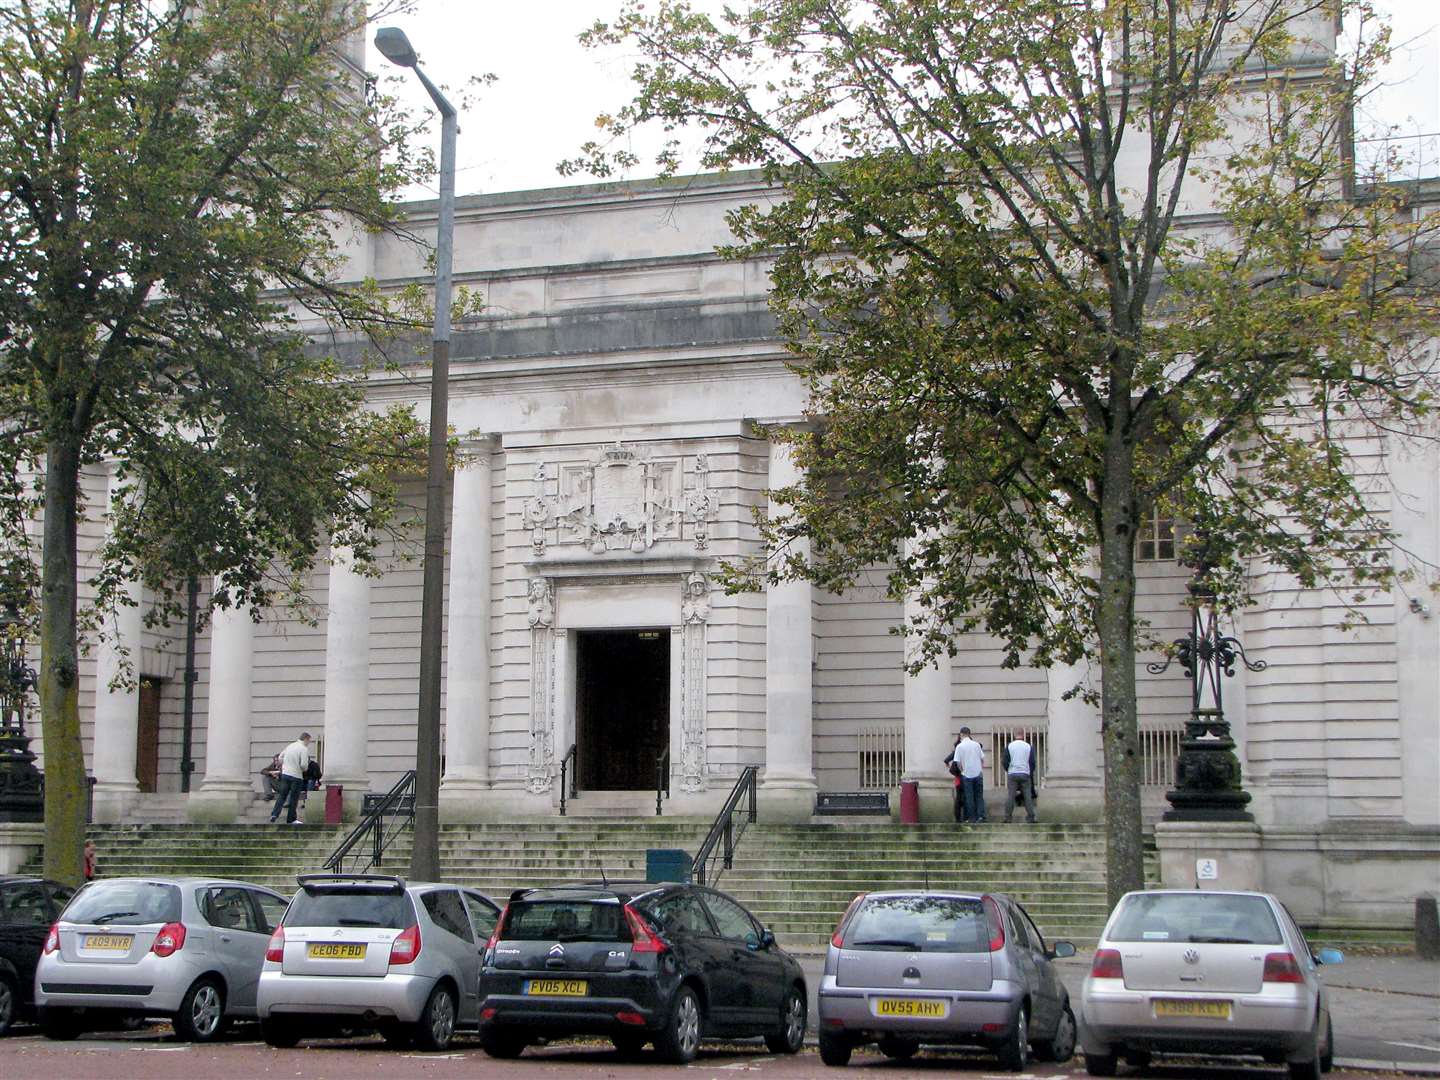 Cardiff Crown Court (Antony Stone/PA)